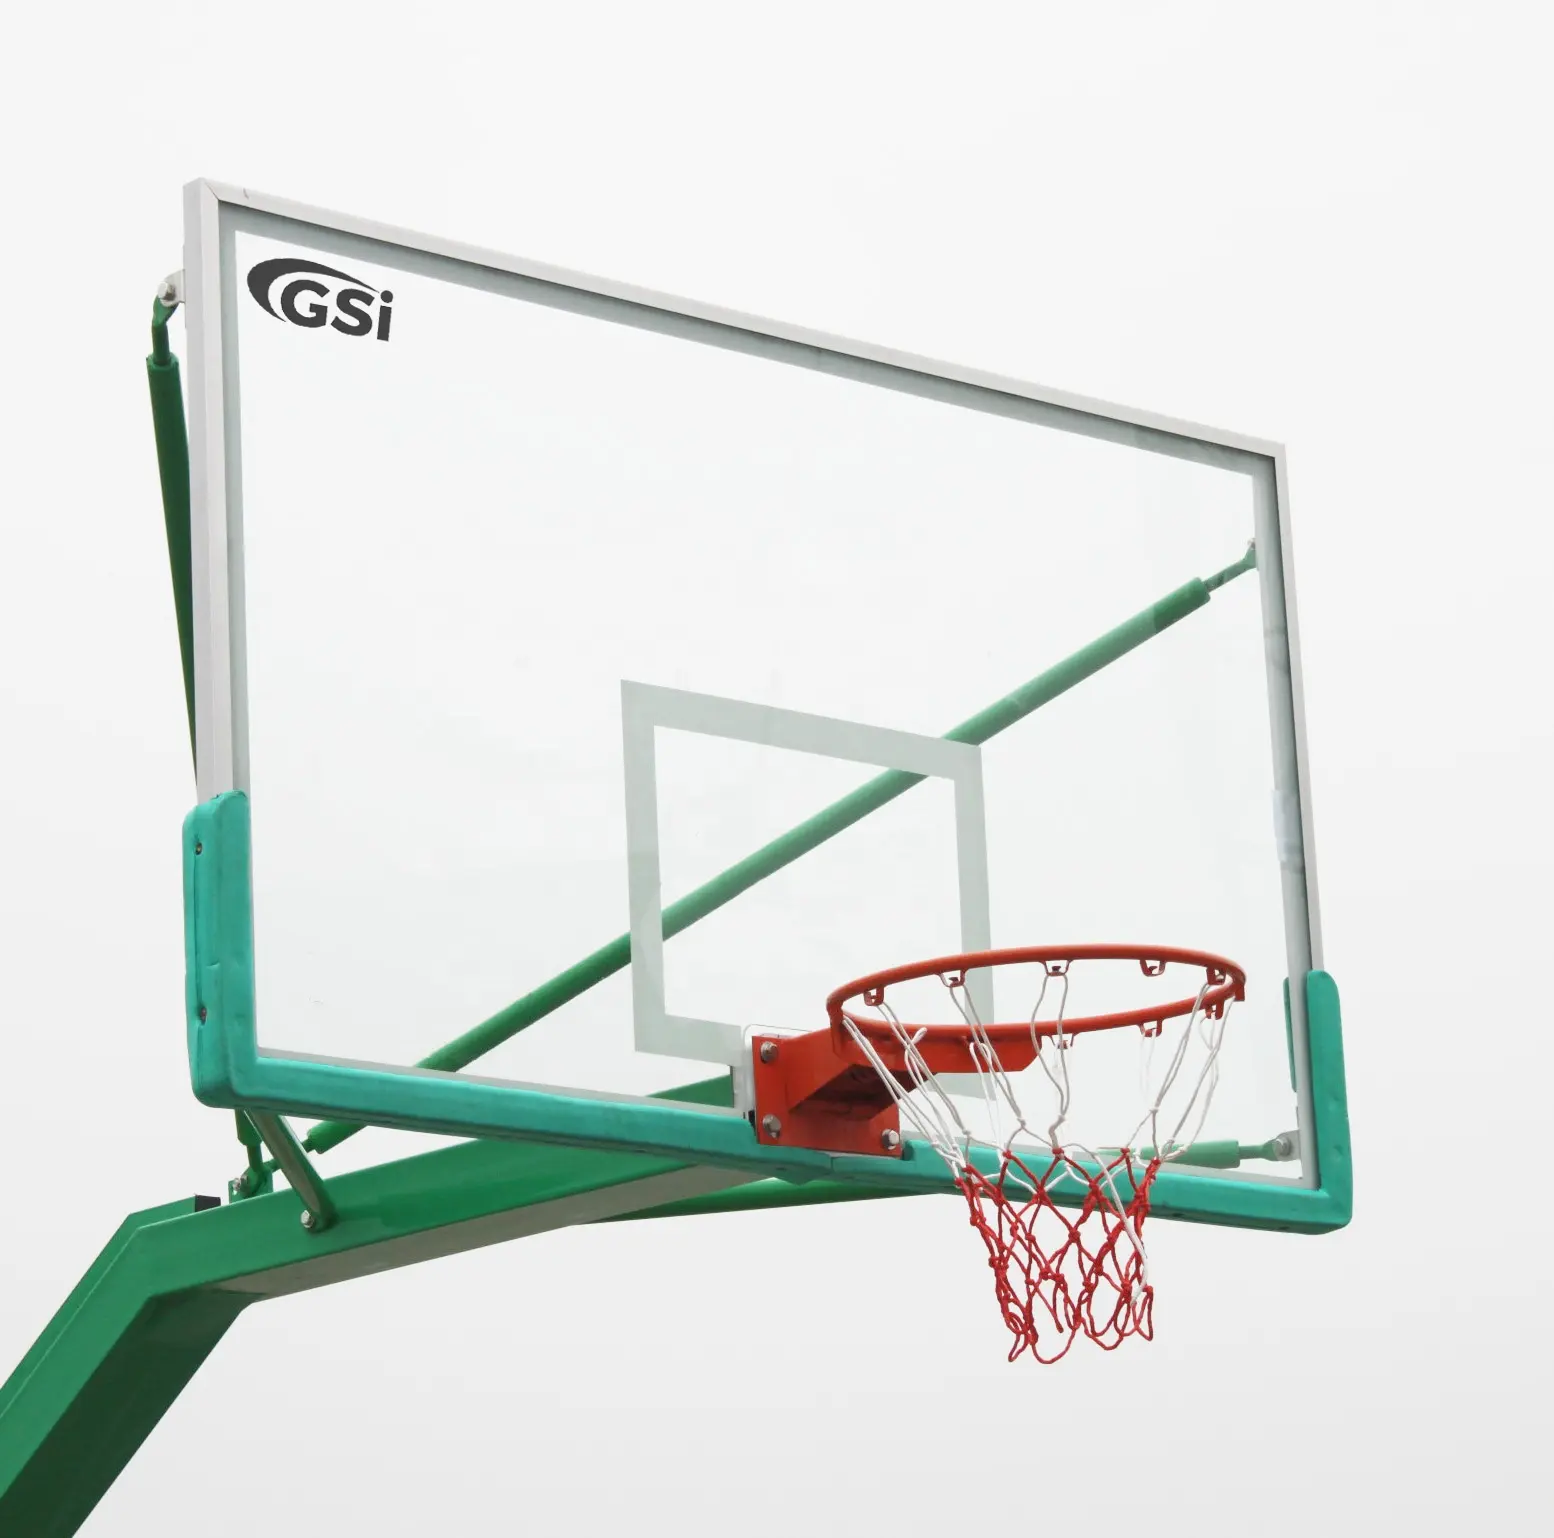 Tablero de baloncesto de acrílico para exteriores personalizado, tablero de baloncesto de acrílico transparente para deportes con anillo, para deportes